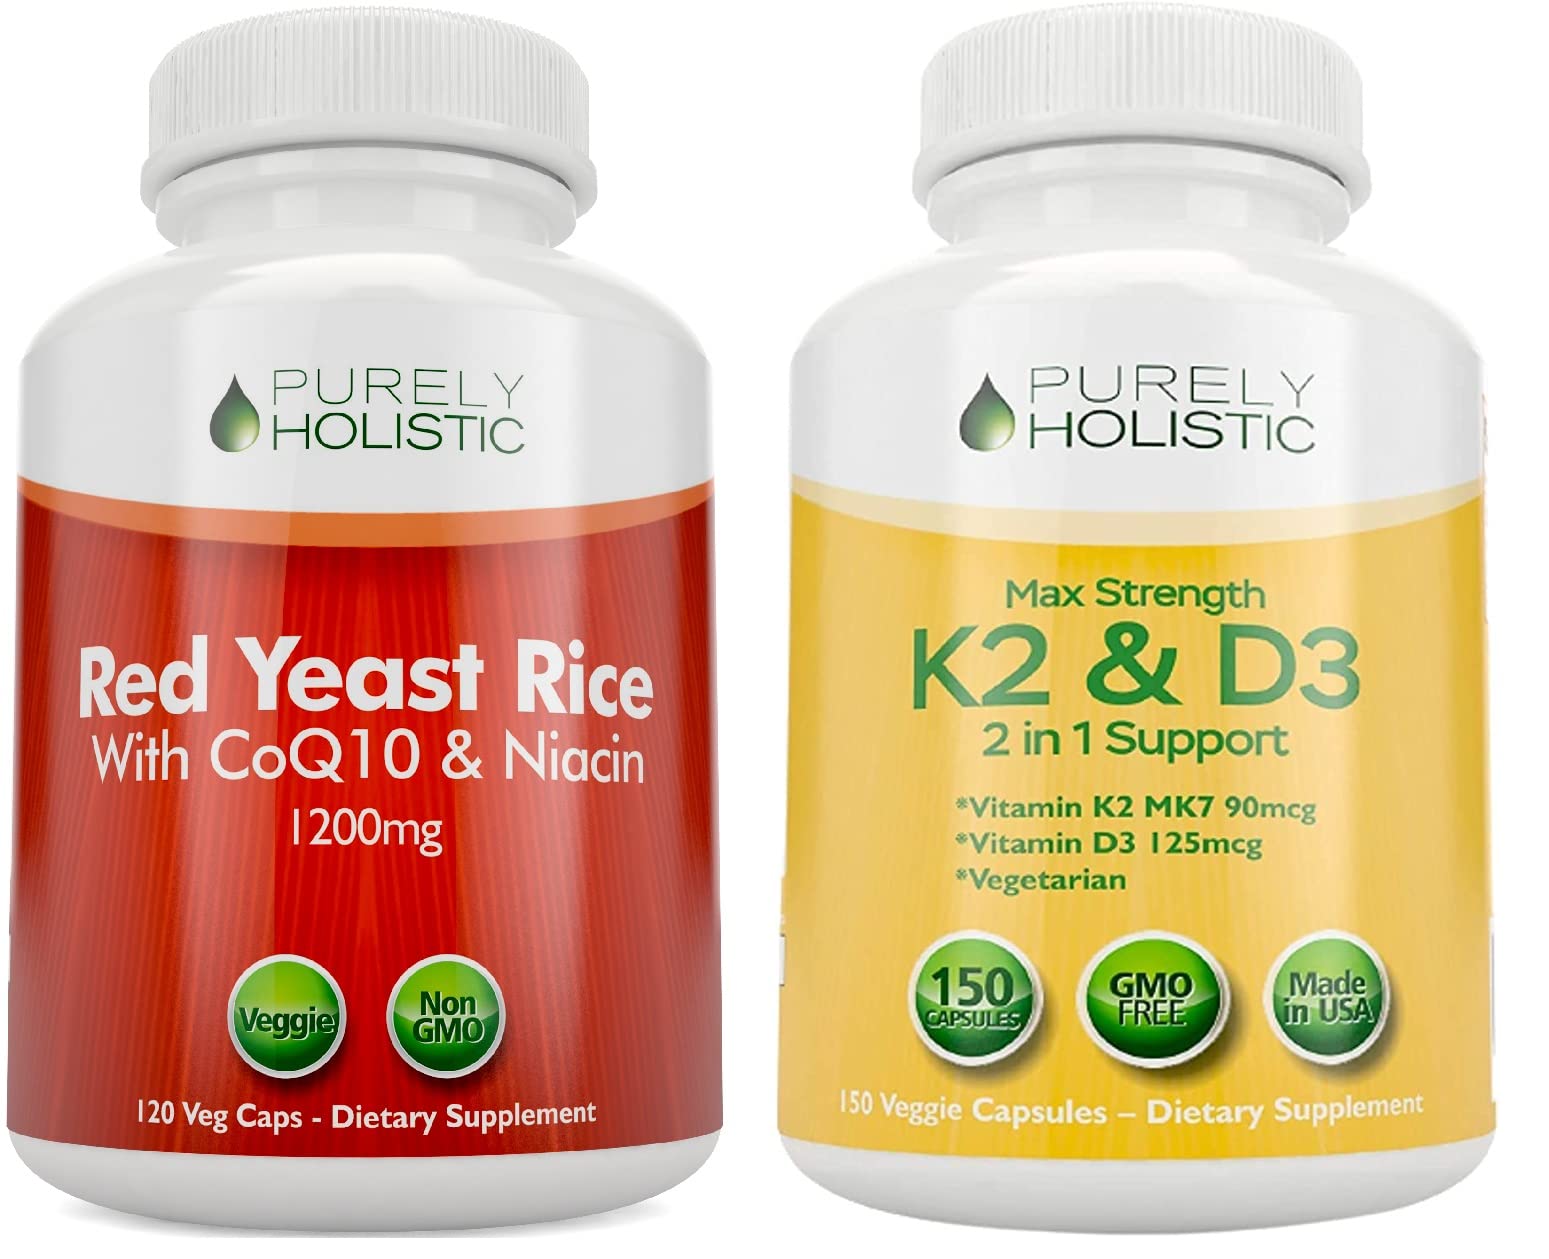 Purely Holistic Red Yeast Rice 1200mg with CoQ10 & Niacin + Vitamin D3 5000 IU (125mcg) & K2 MK7 90mcg Bundle - 270 Vegetarian Capsules - Made in USA